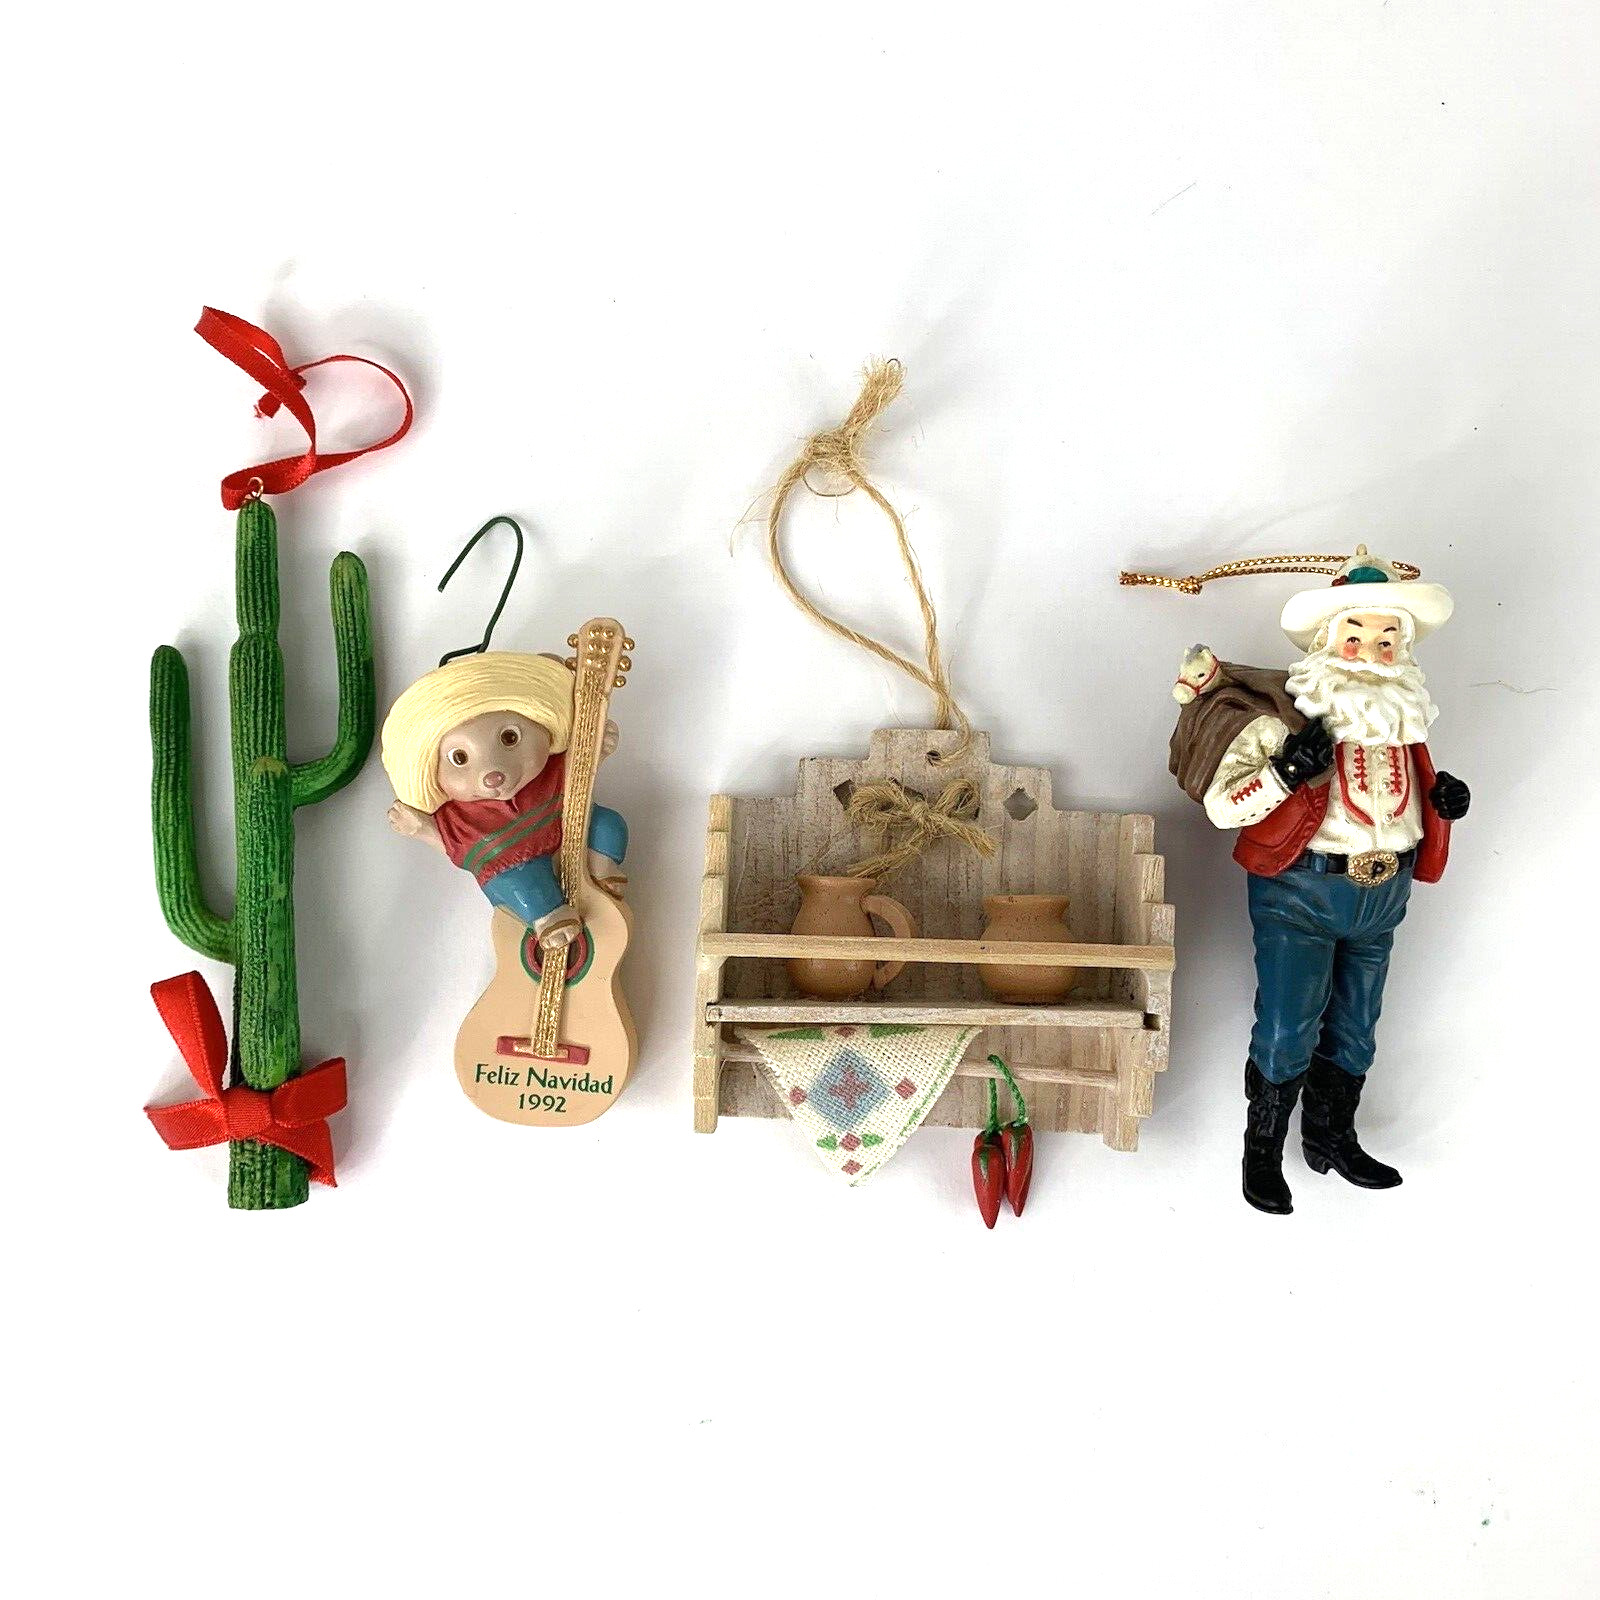 Lot of 4 Southwest Christmas Tree Ornaments Cowboy Santa Cactus 1992 Mouse